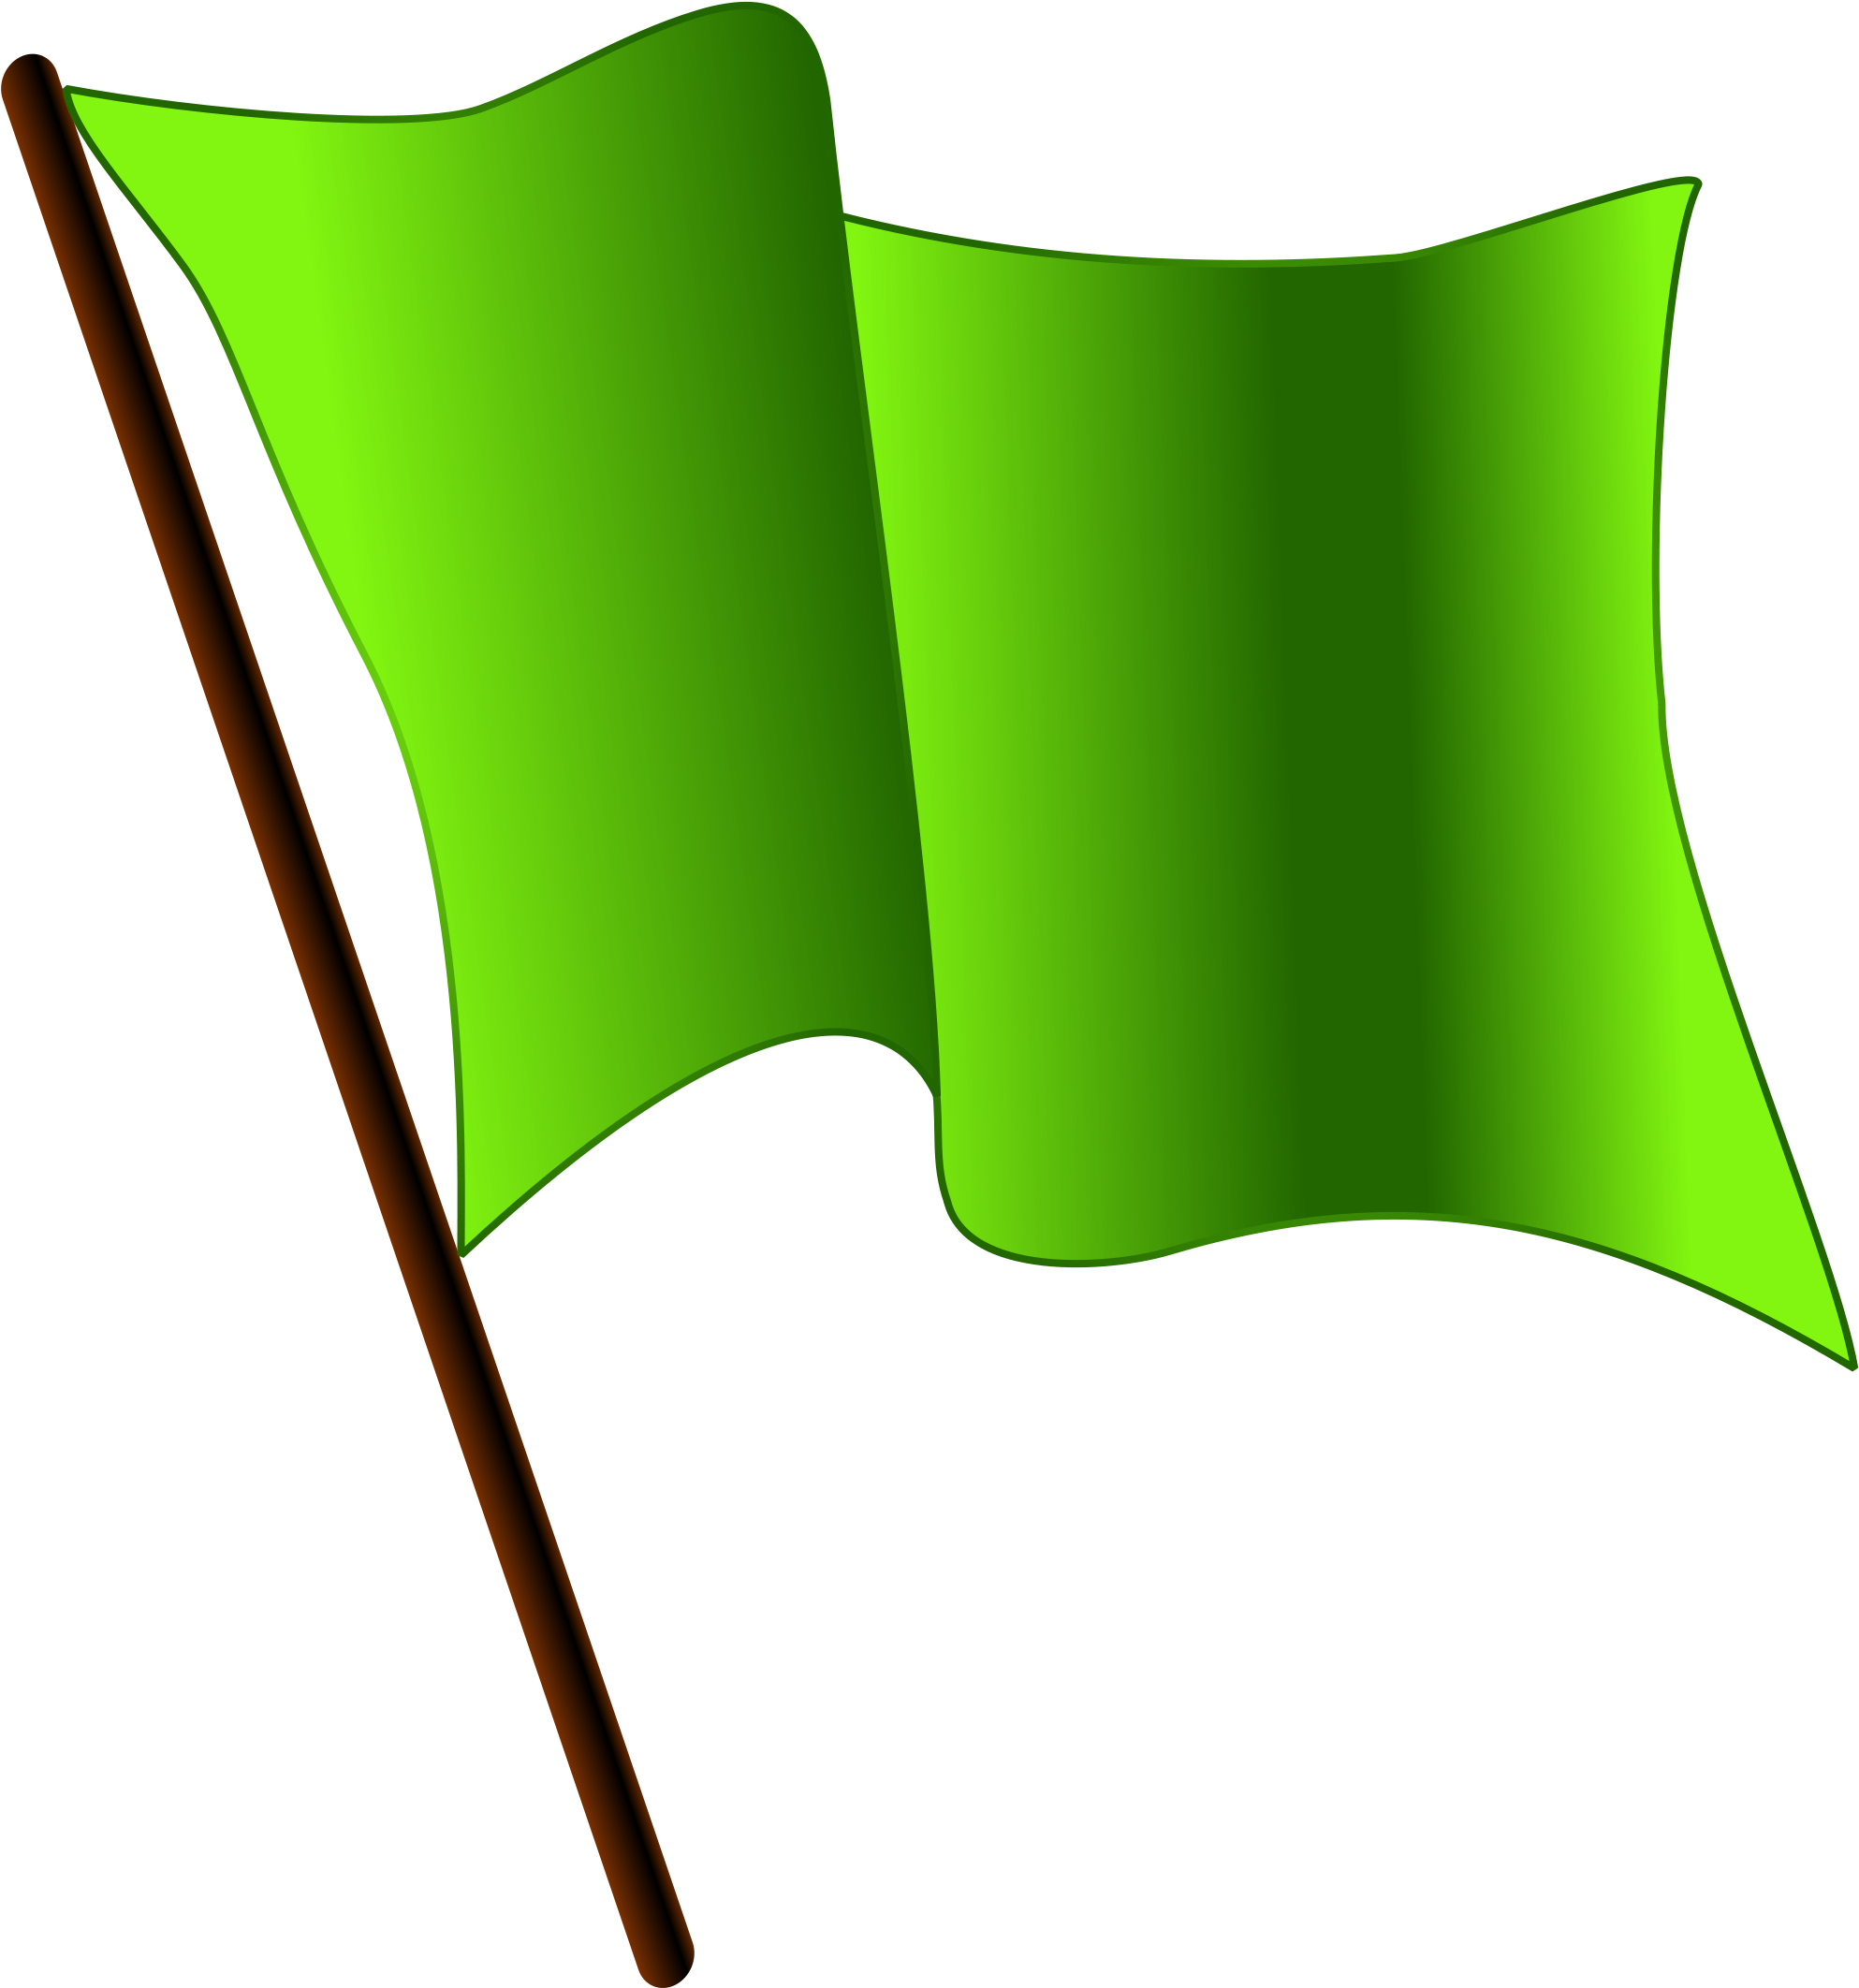 Open - Green Flag Waving (2000x2153)